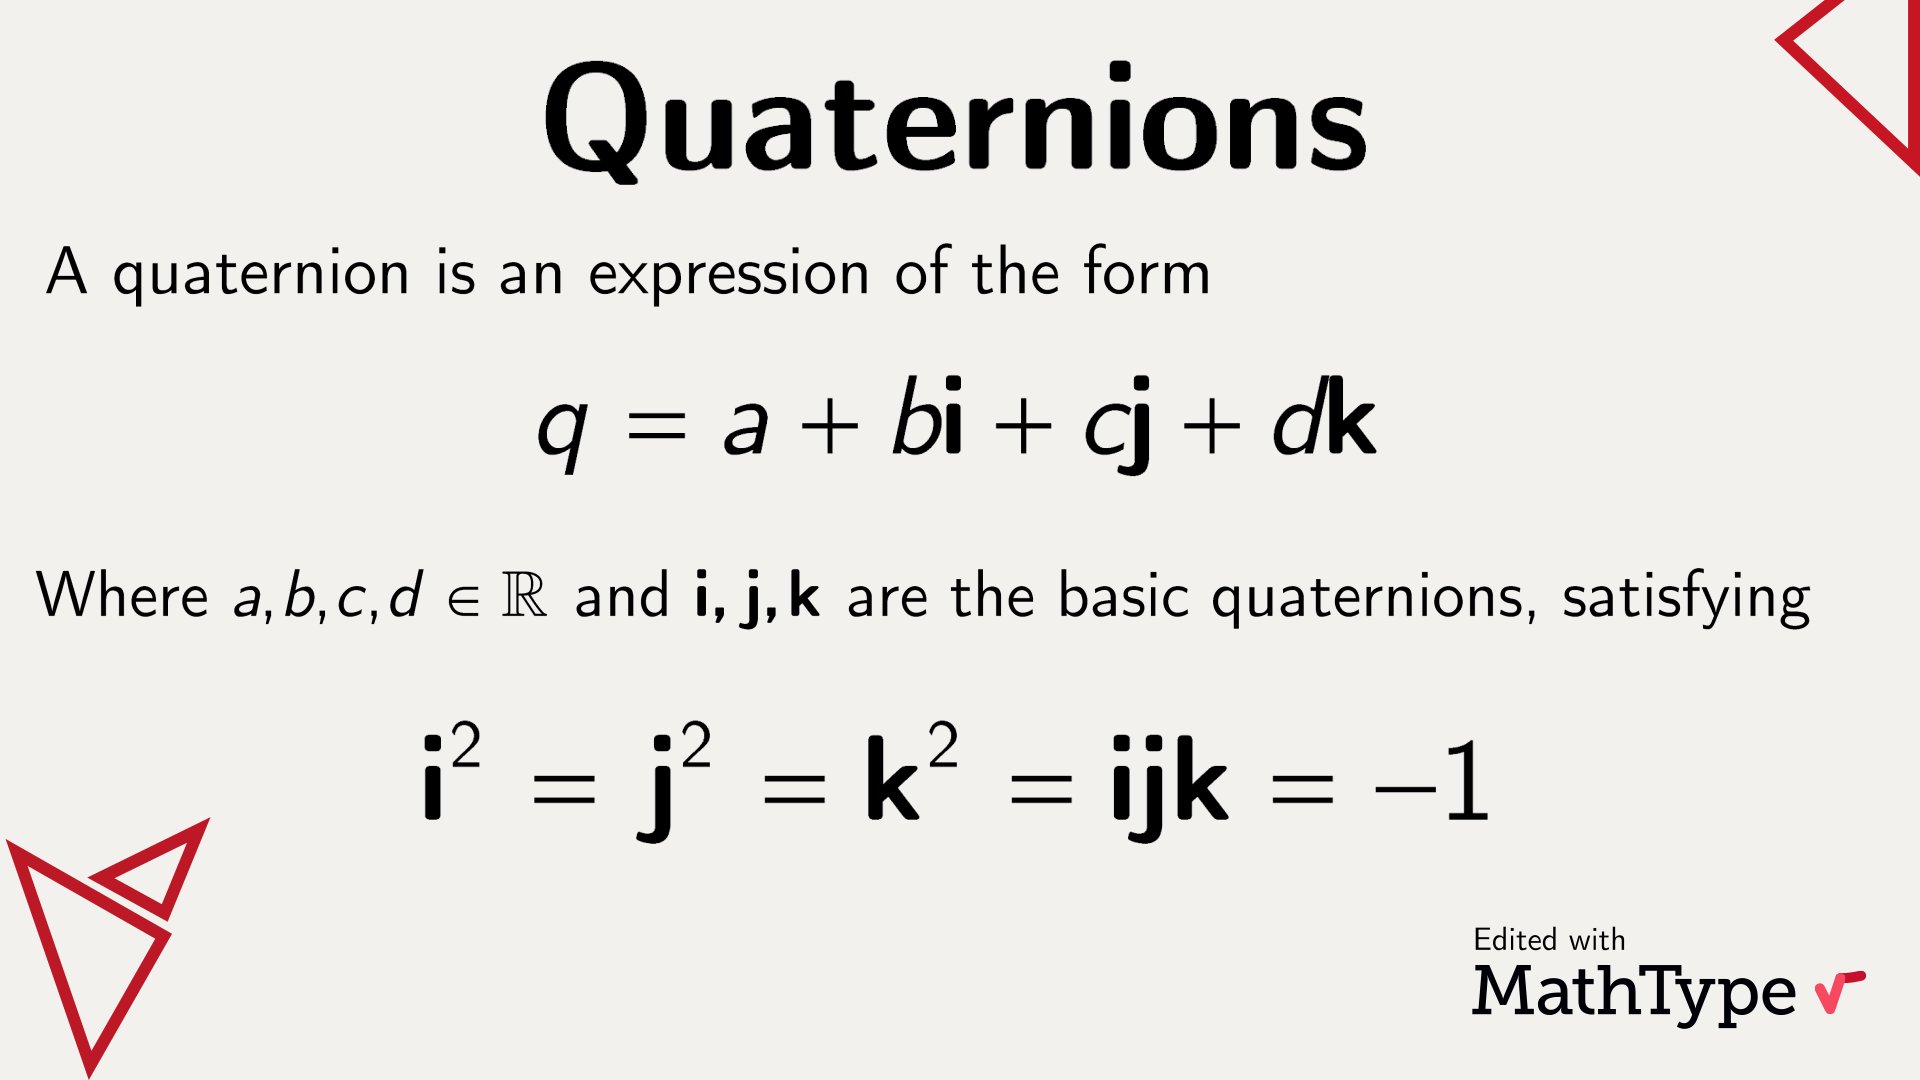 quaternion - Twitter Search / Twitter